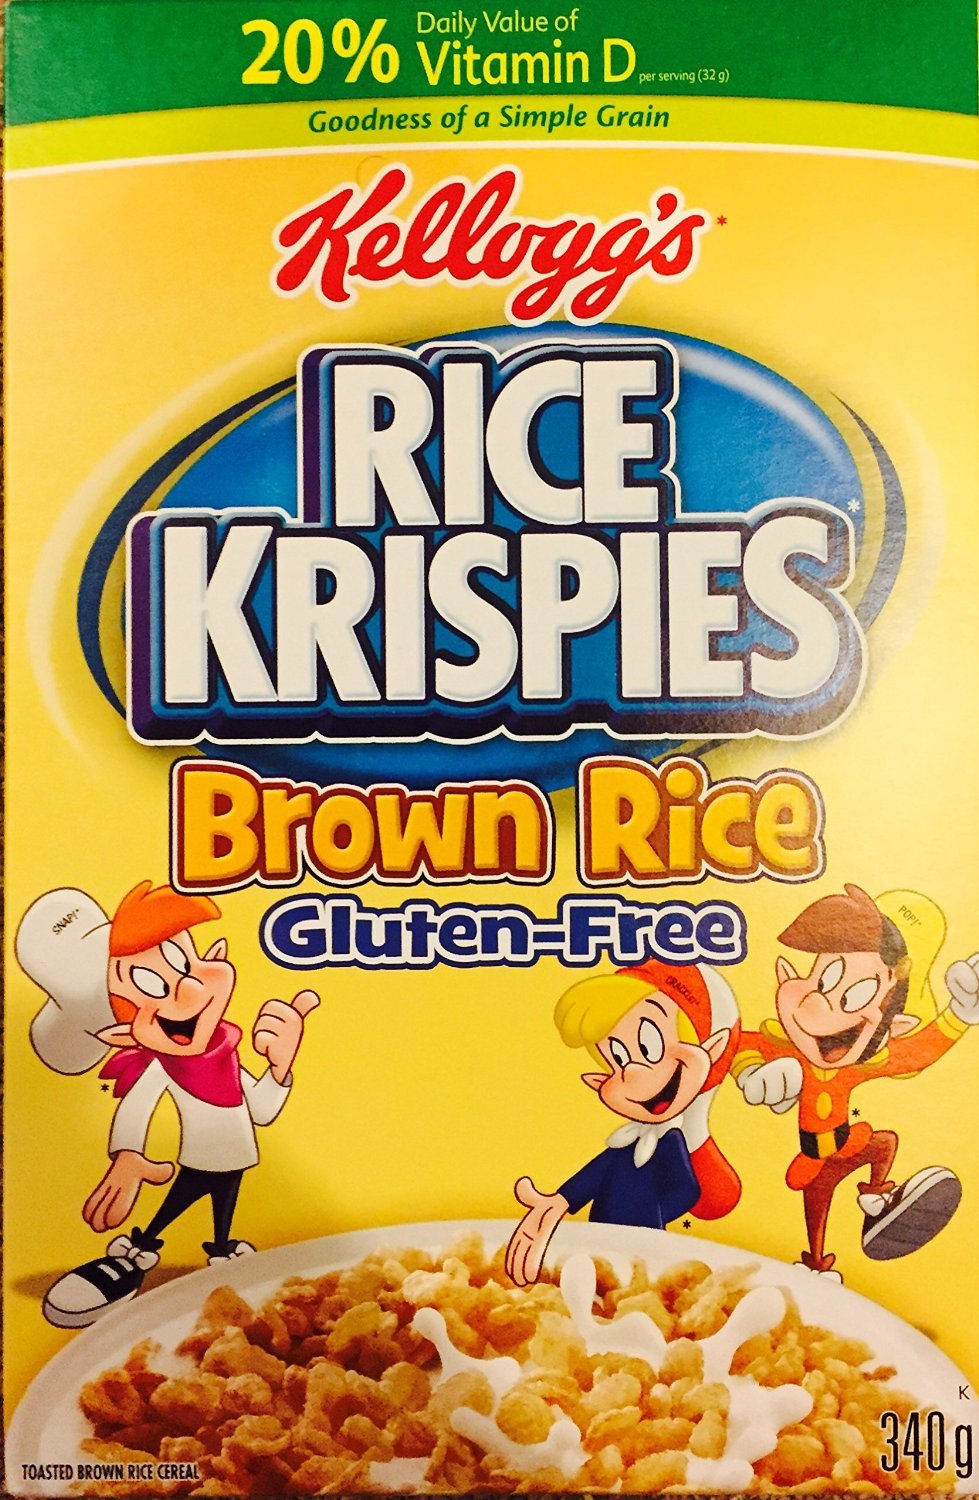 are rice krispies gluten